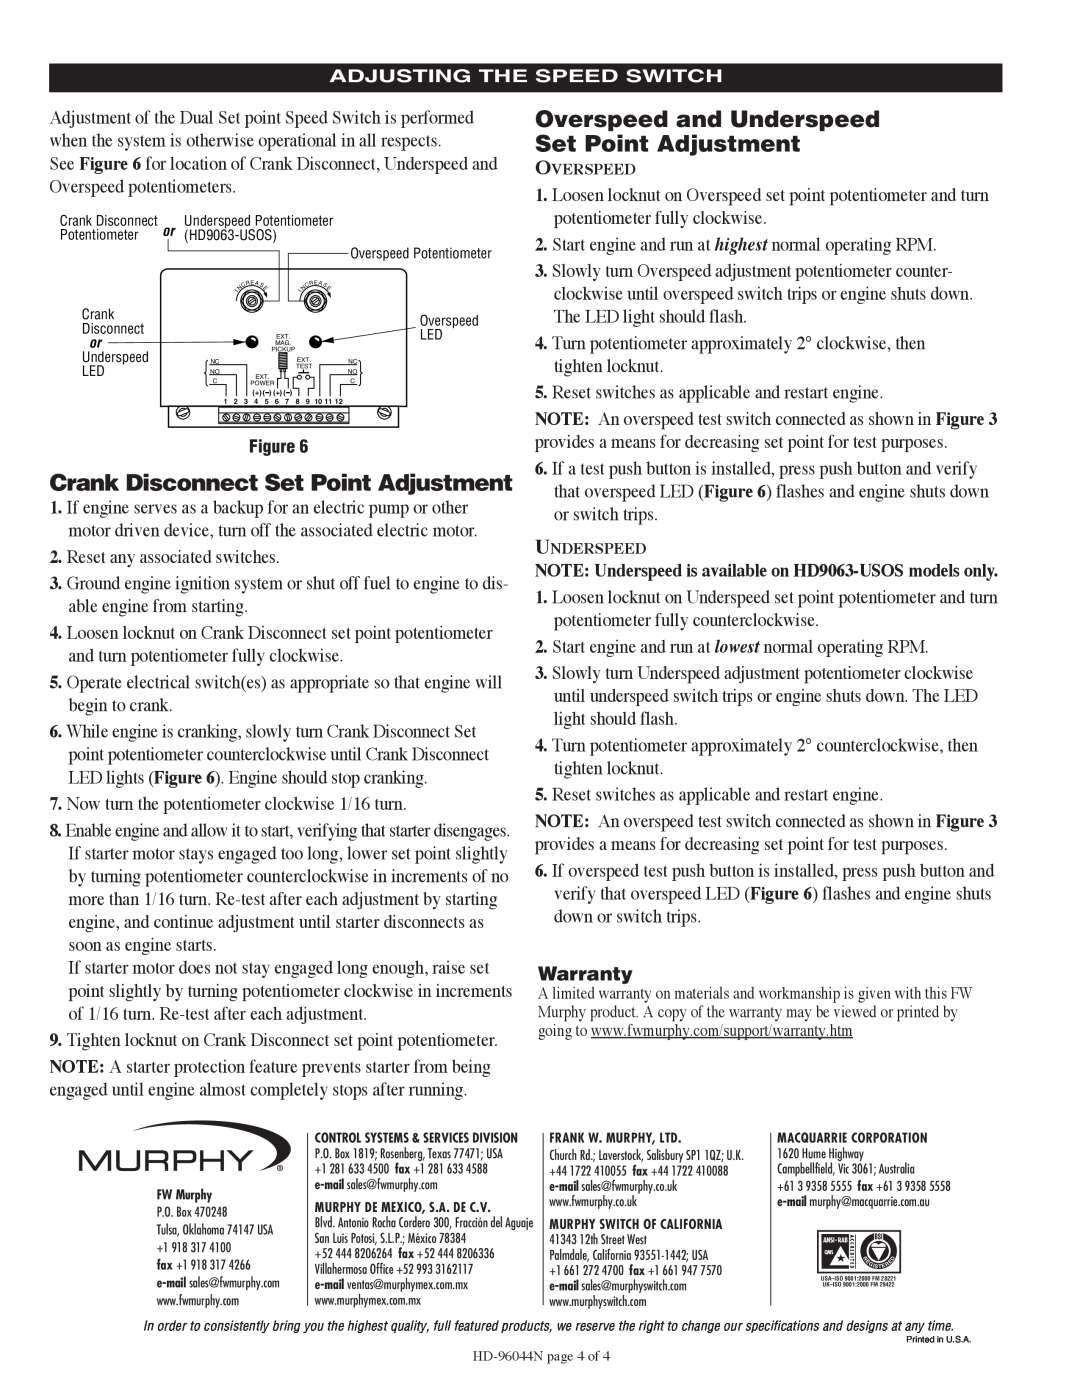 Murphy HD9063 Series Crank Disconnect Set Point Adjustment, Overspeed and Underspeed Set Point Adjustment, Warranty 